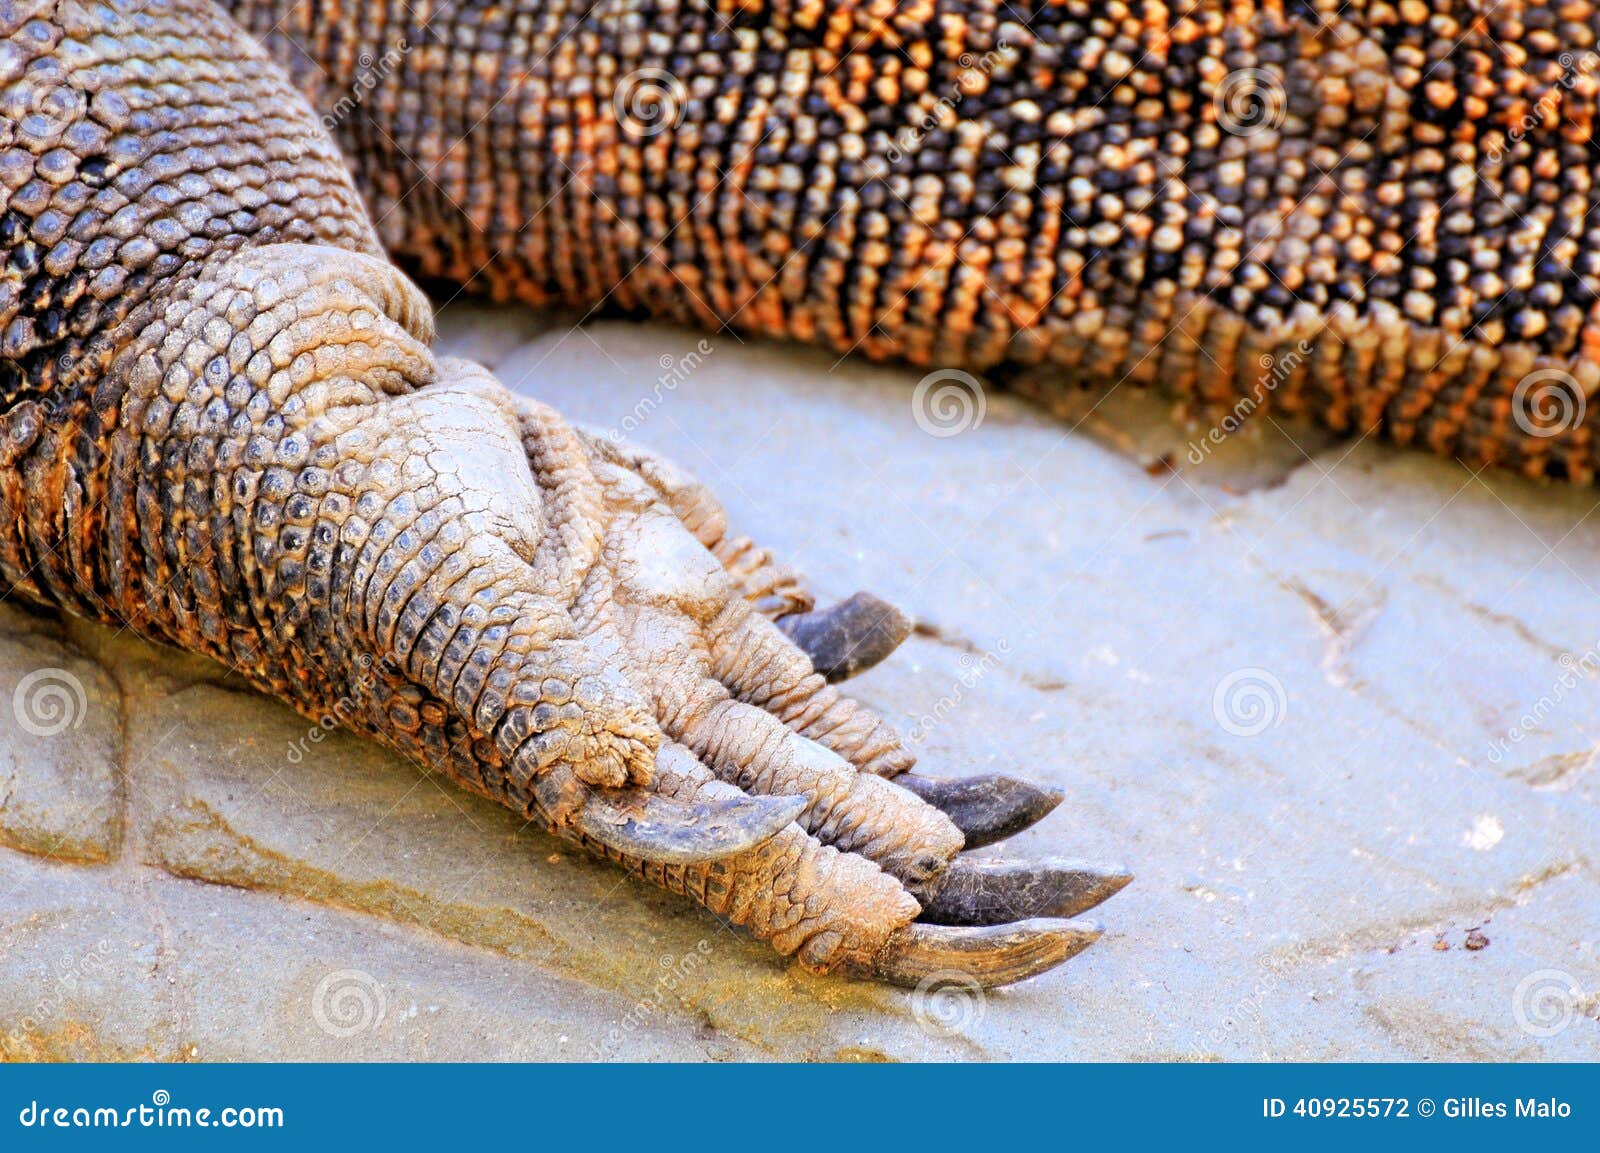 komodo dragon foot